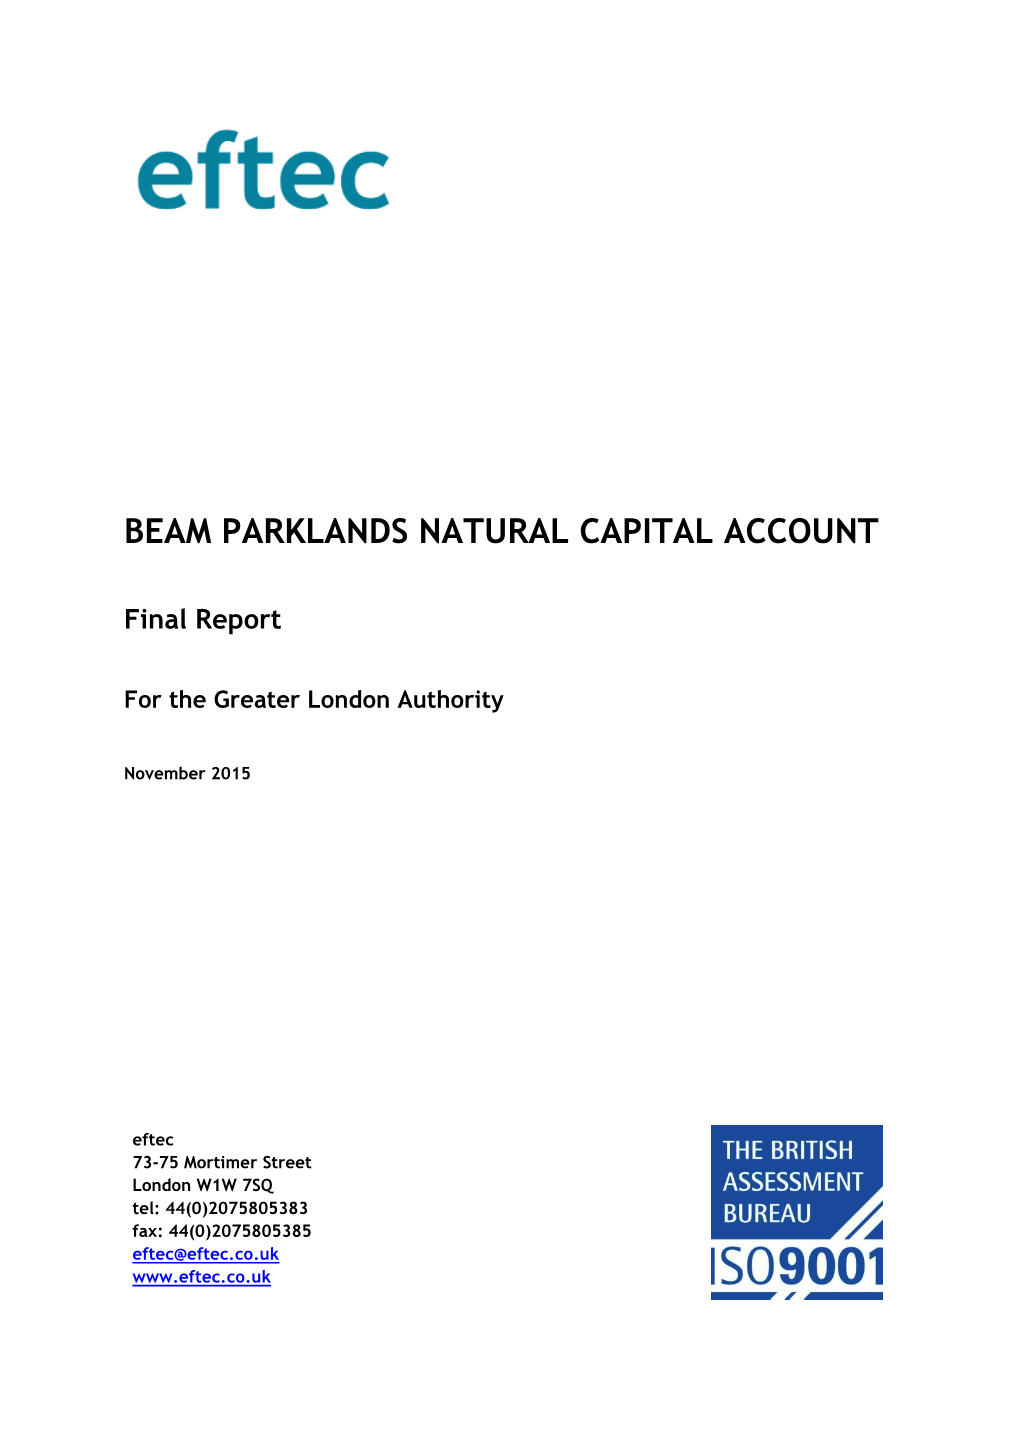 Beam Parklands Natural Capital Account